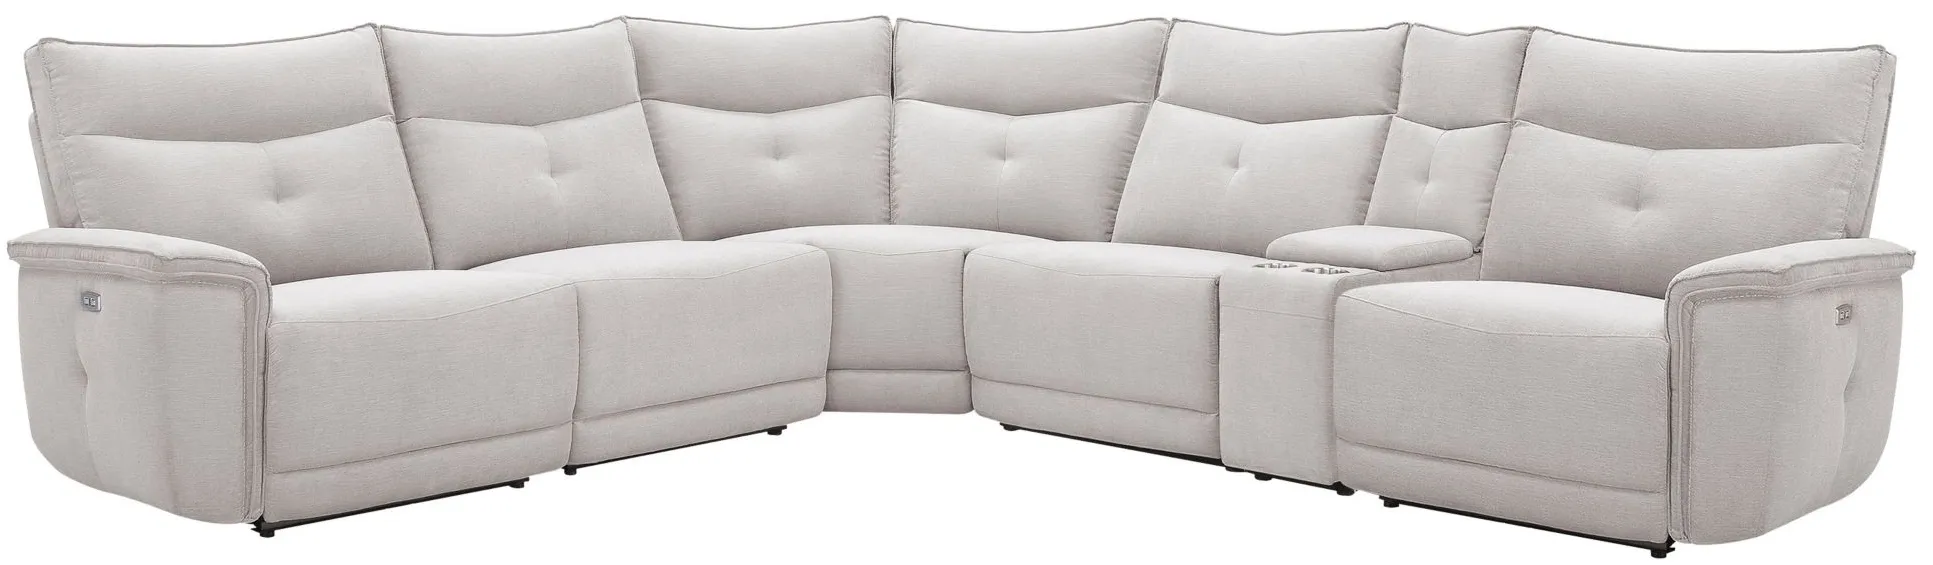 Graceland 6-pc Sectional Sofa W/Power Headrest in Mist Gray by Bellanest